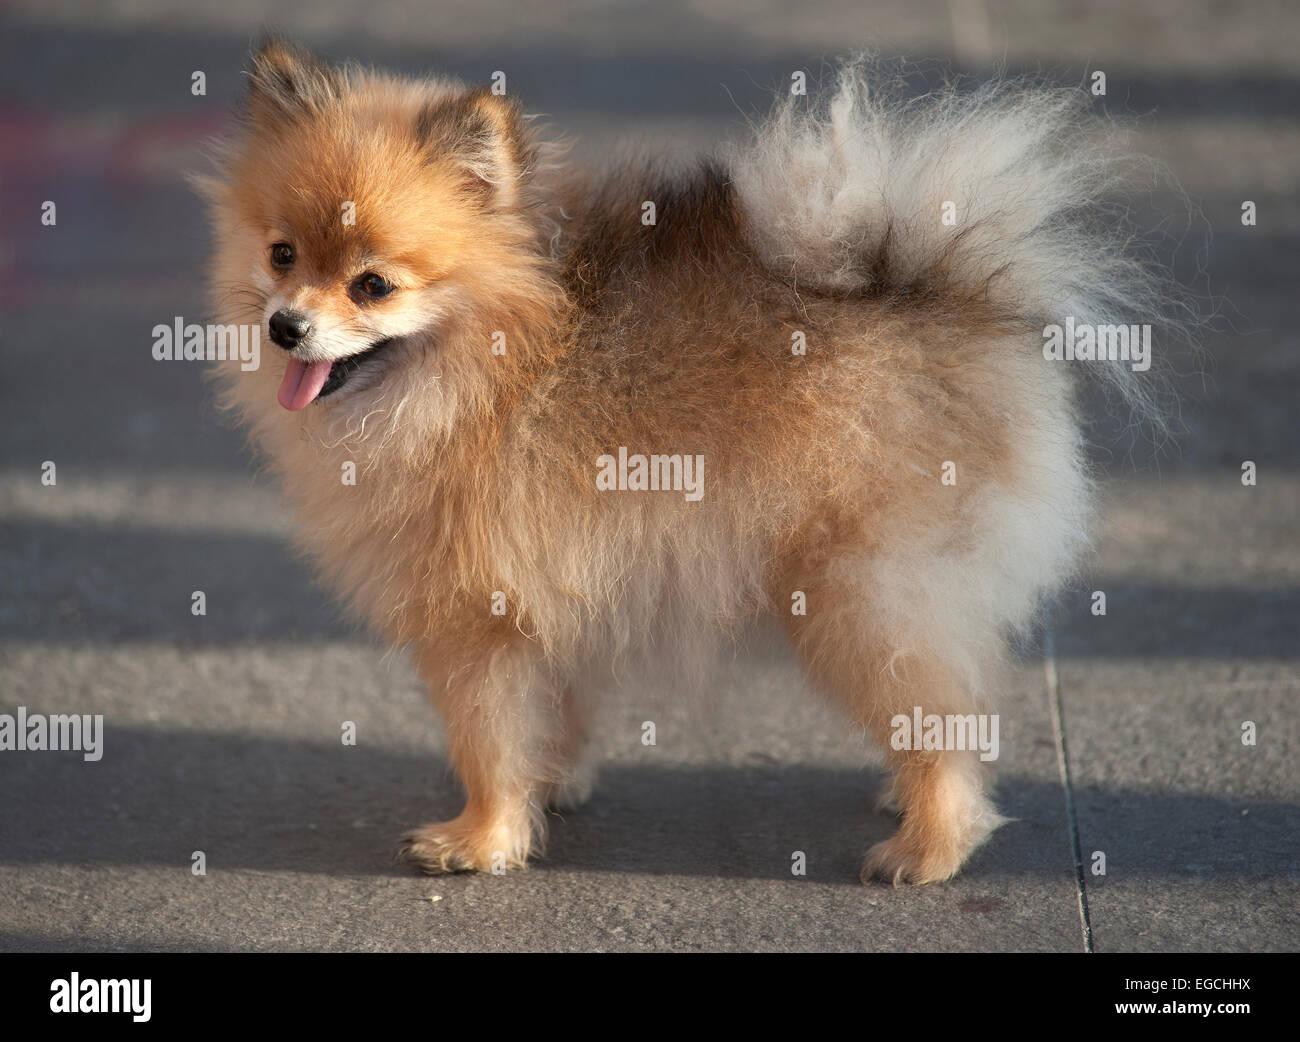 Pomeranian Teacup dog Stock Photo - Alamy